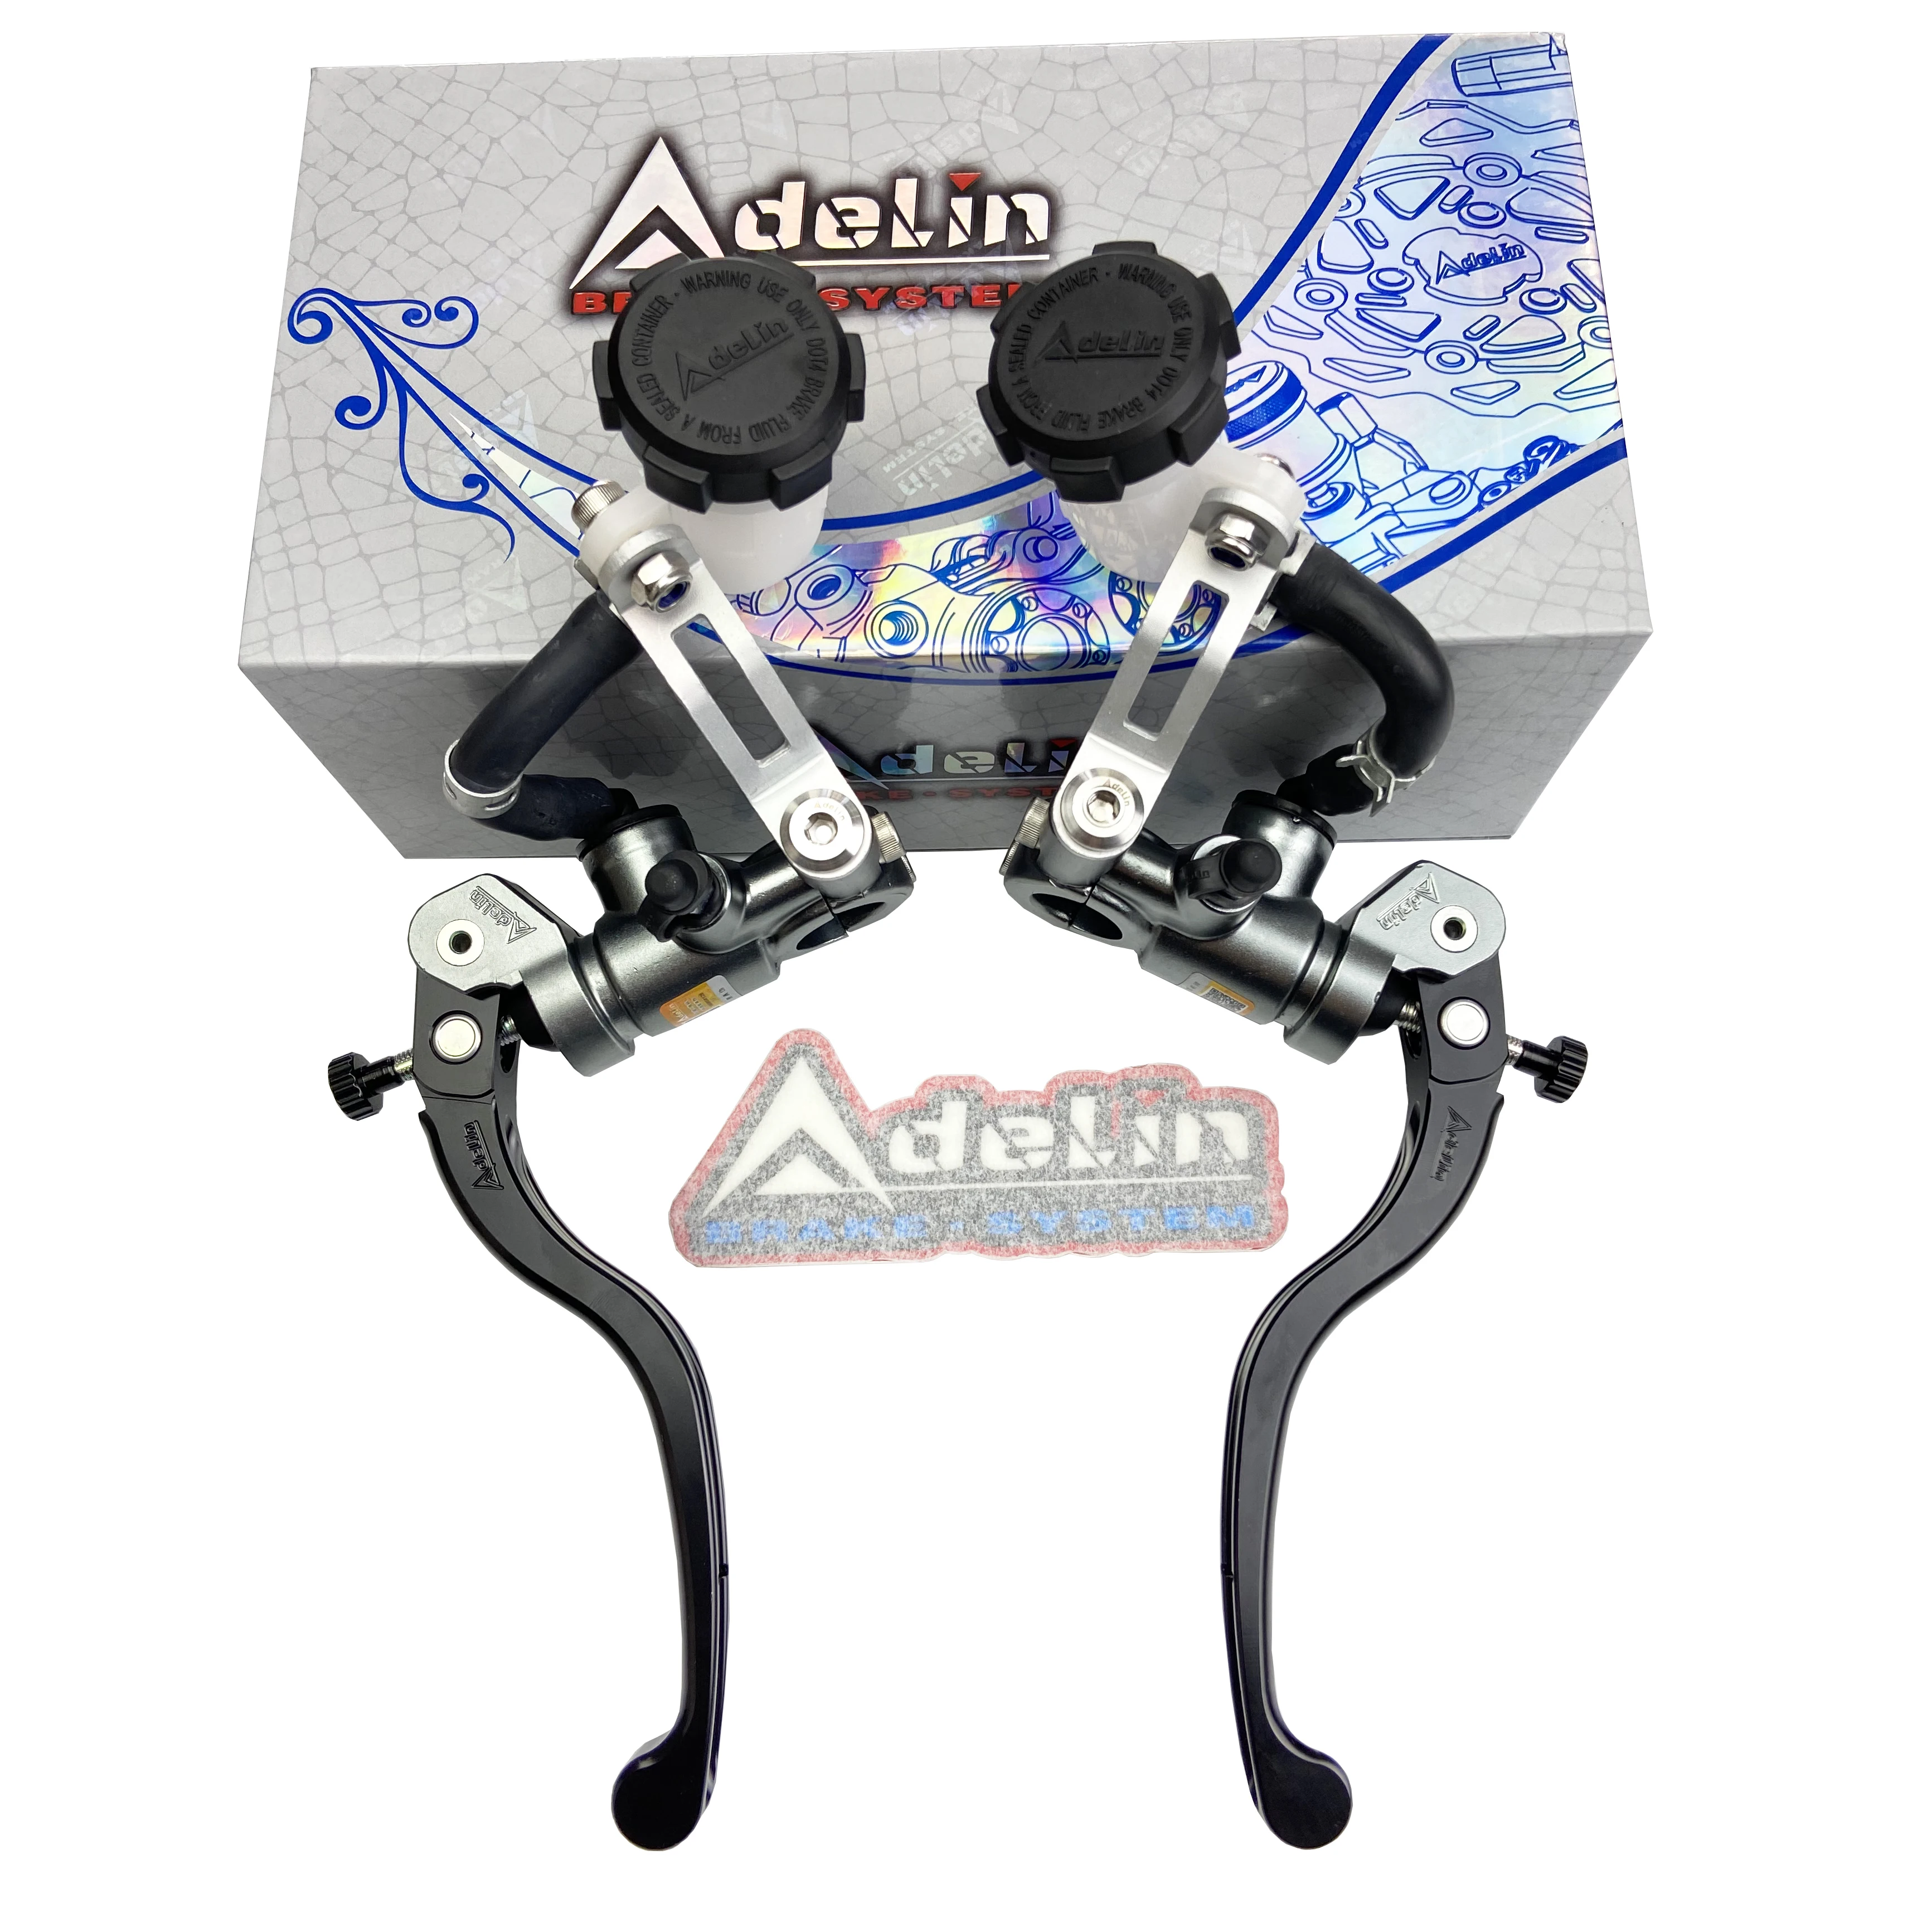 Adelin 14mm 15mm Motorcycle Brake Clutch Master Cylinder Hydraulic Pump handle Universal For Honda R6 Gsxr600 Yamaha Kawasaki